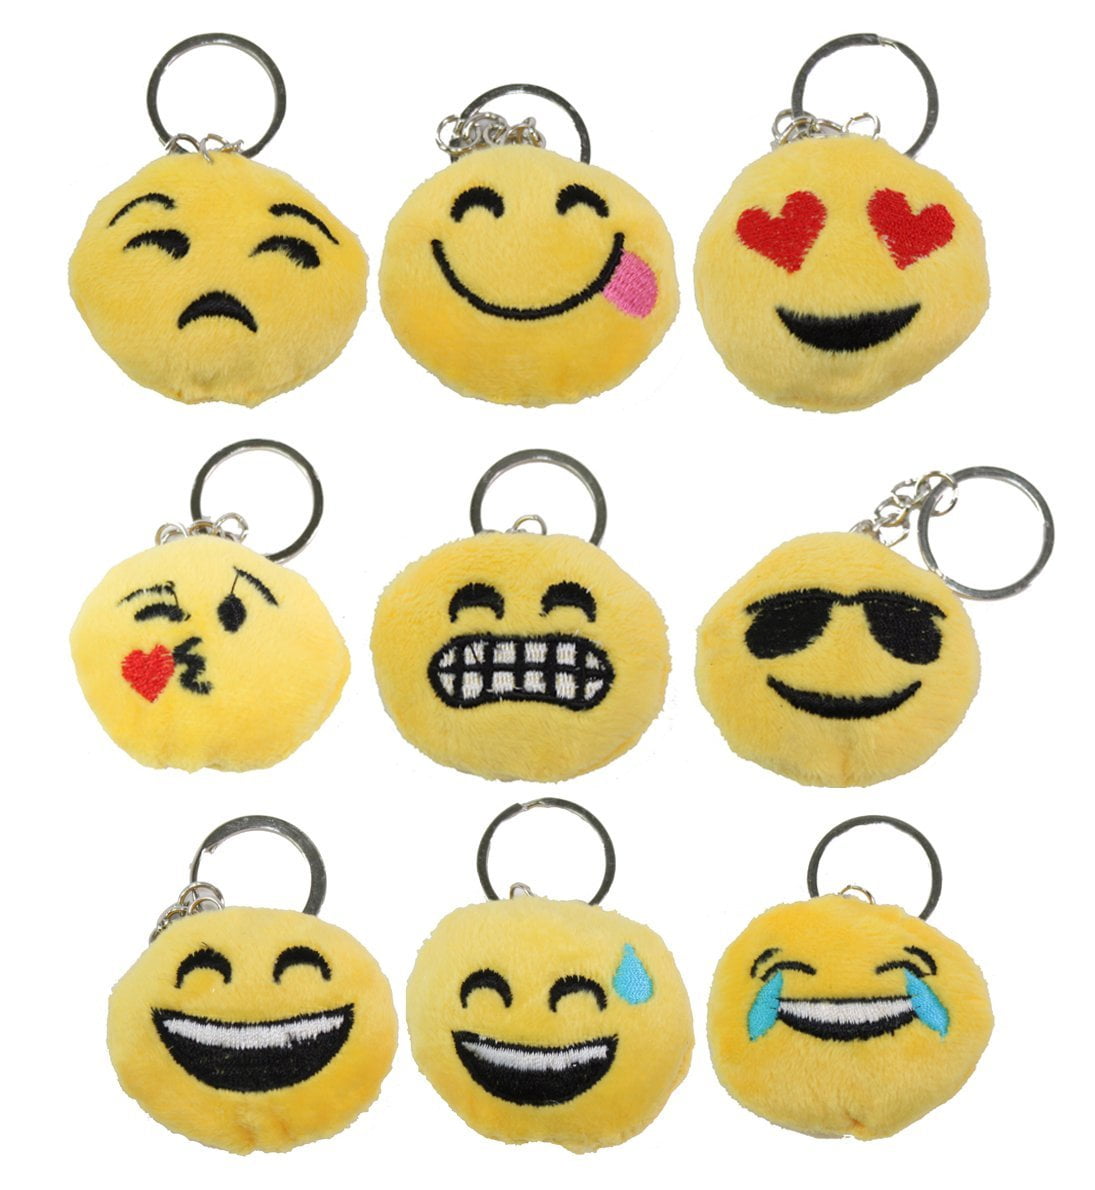 30x Mini Emoji Face Plush Key Chain Ring Emoticon Toy Keychain Handbag Bag Gift 